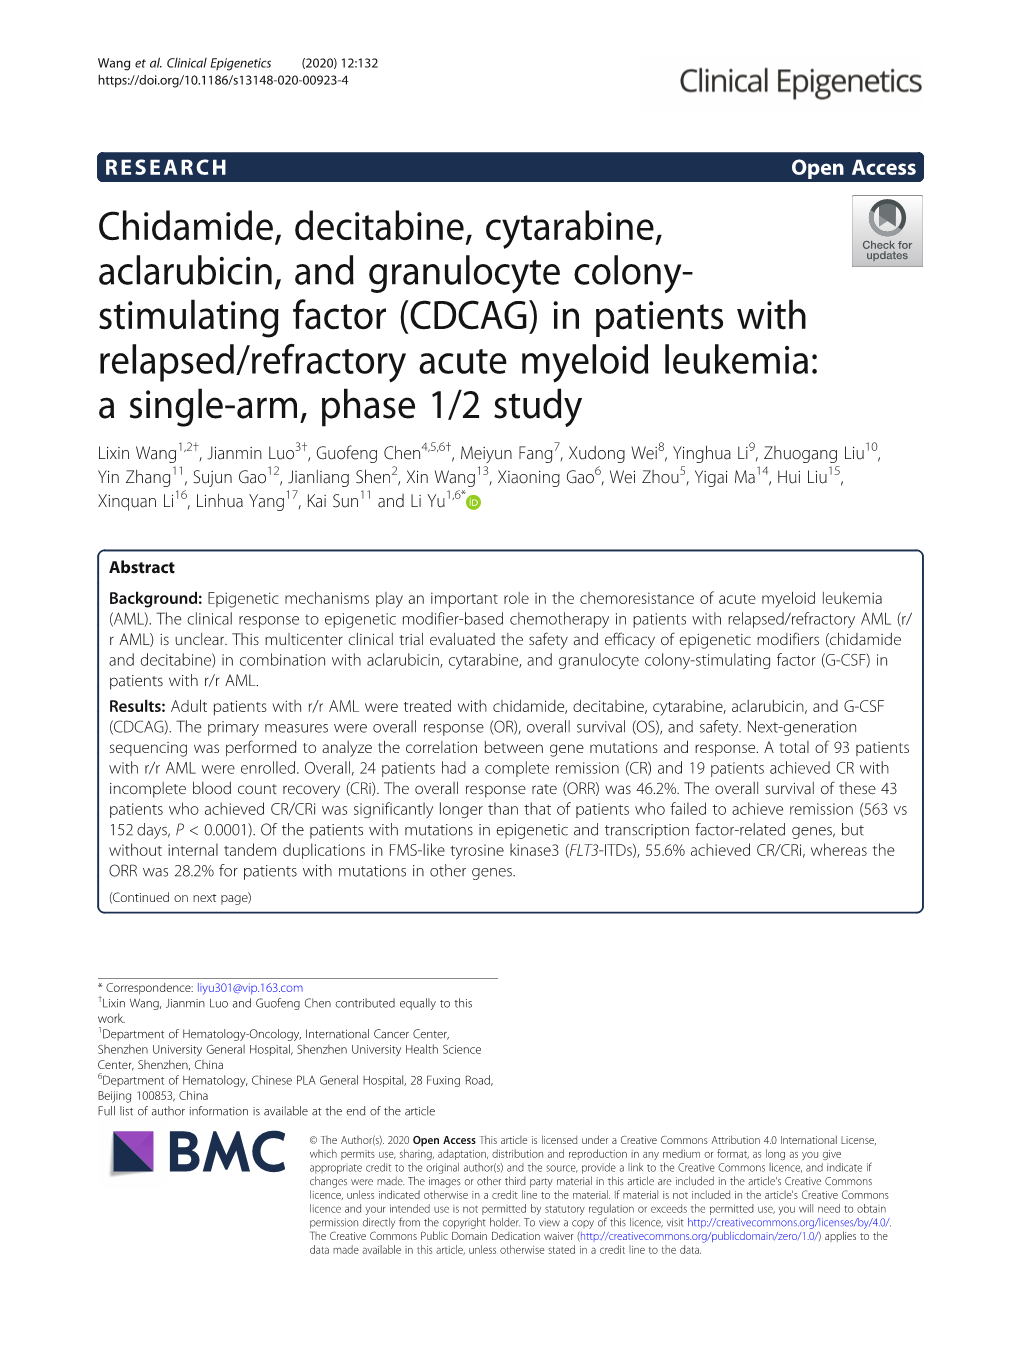 Chidamide, Decitabine, Cytarabine, Aclarubicin, and Granulocyte Colony